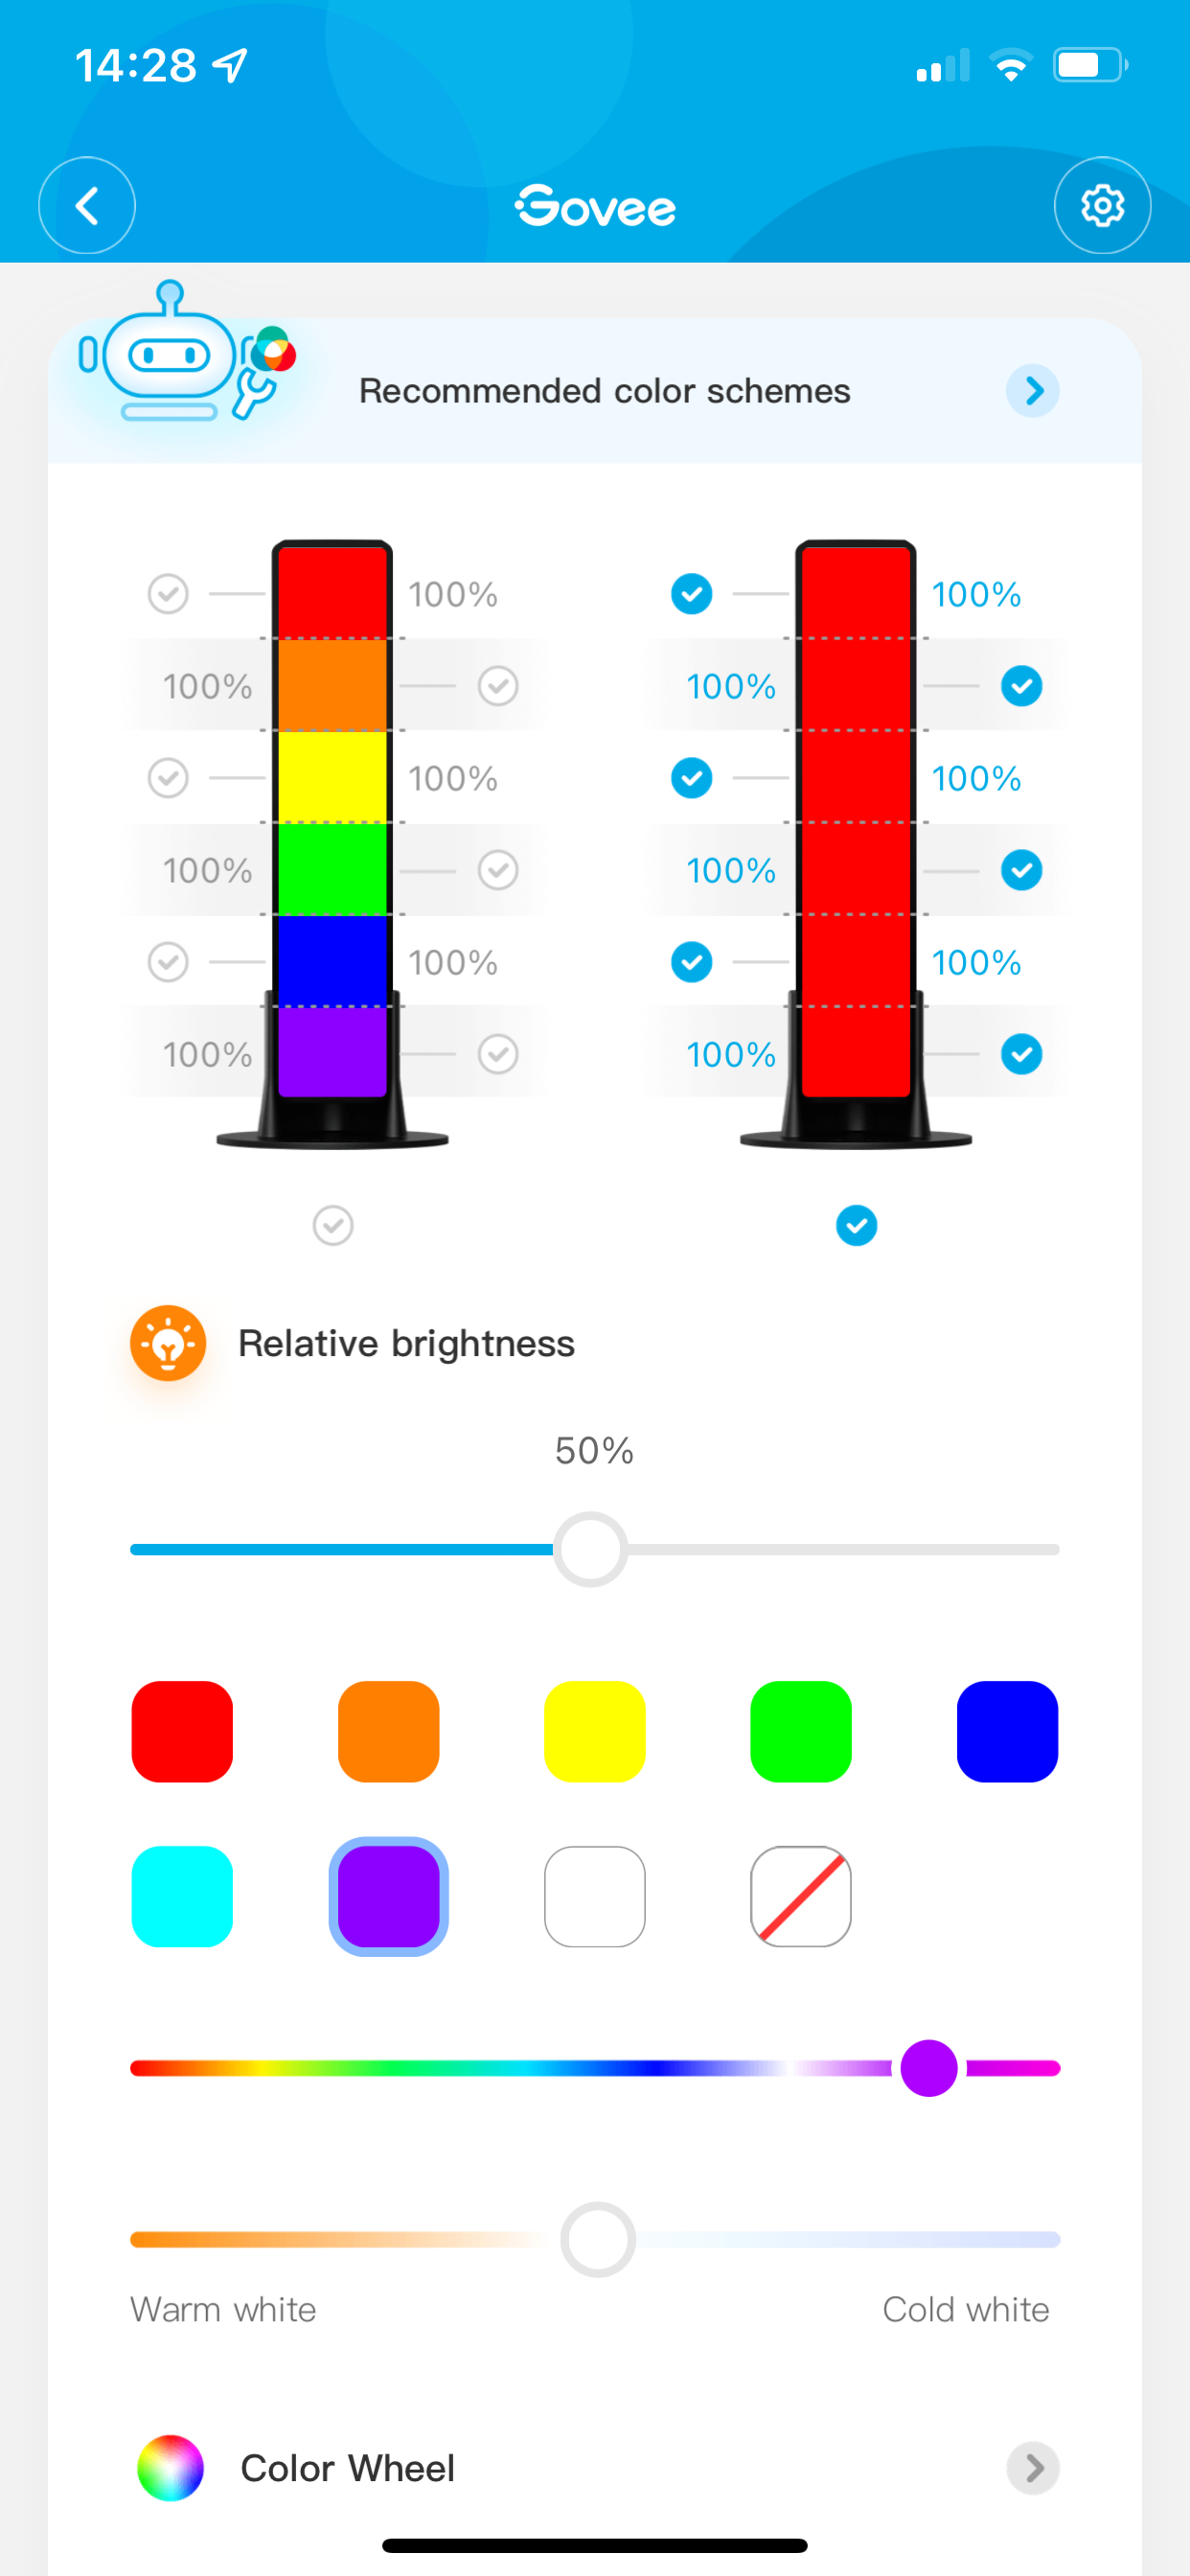 Govee Home App Colors